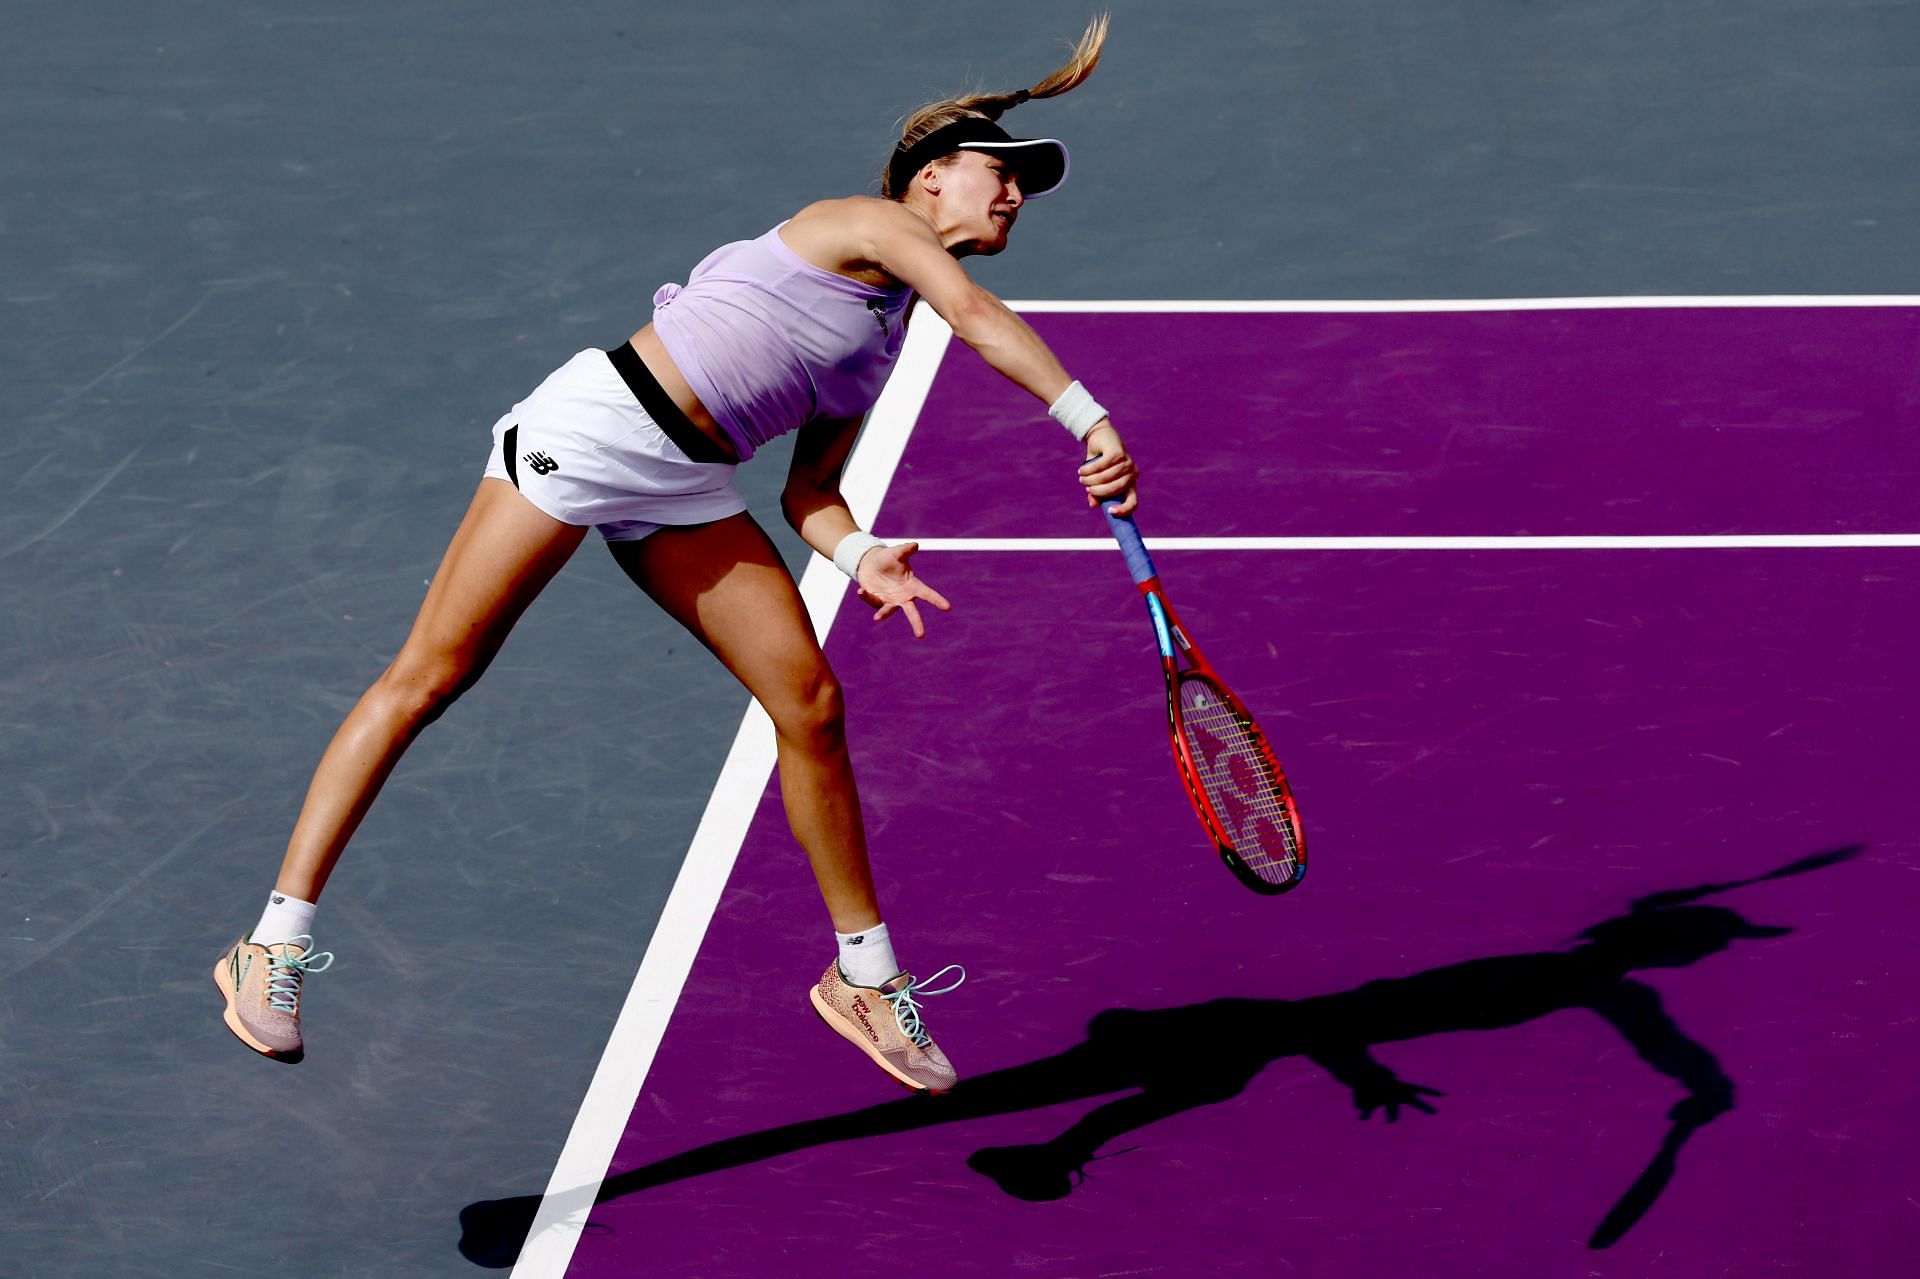 Bouchard serves during the WTA Guadalajara Open Akron 2022